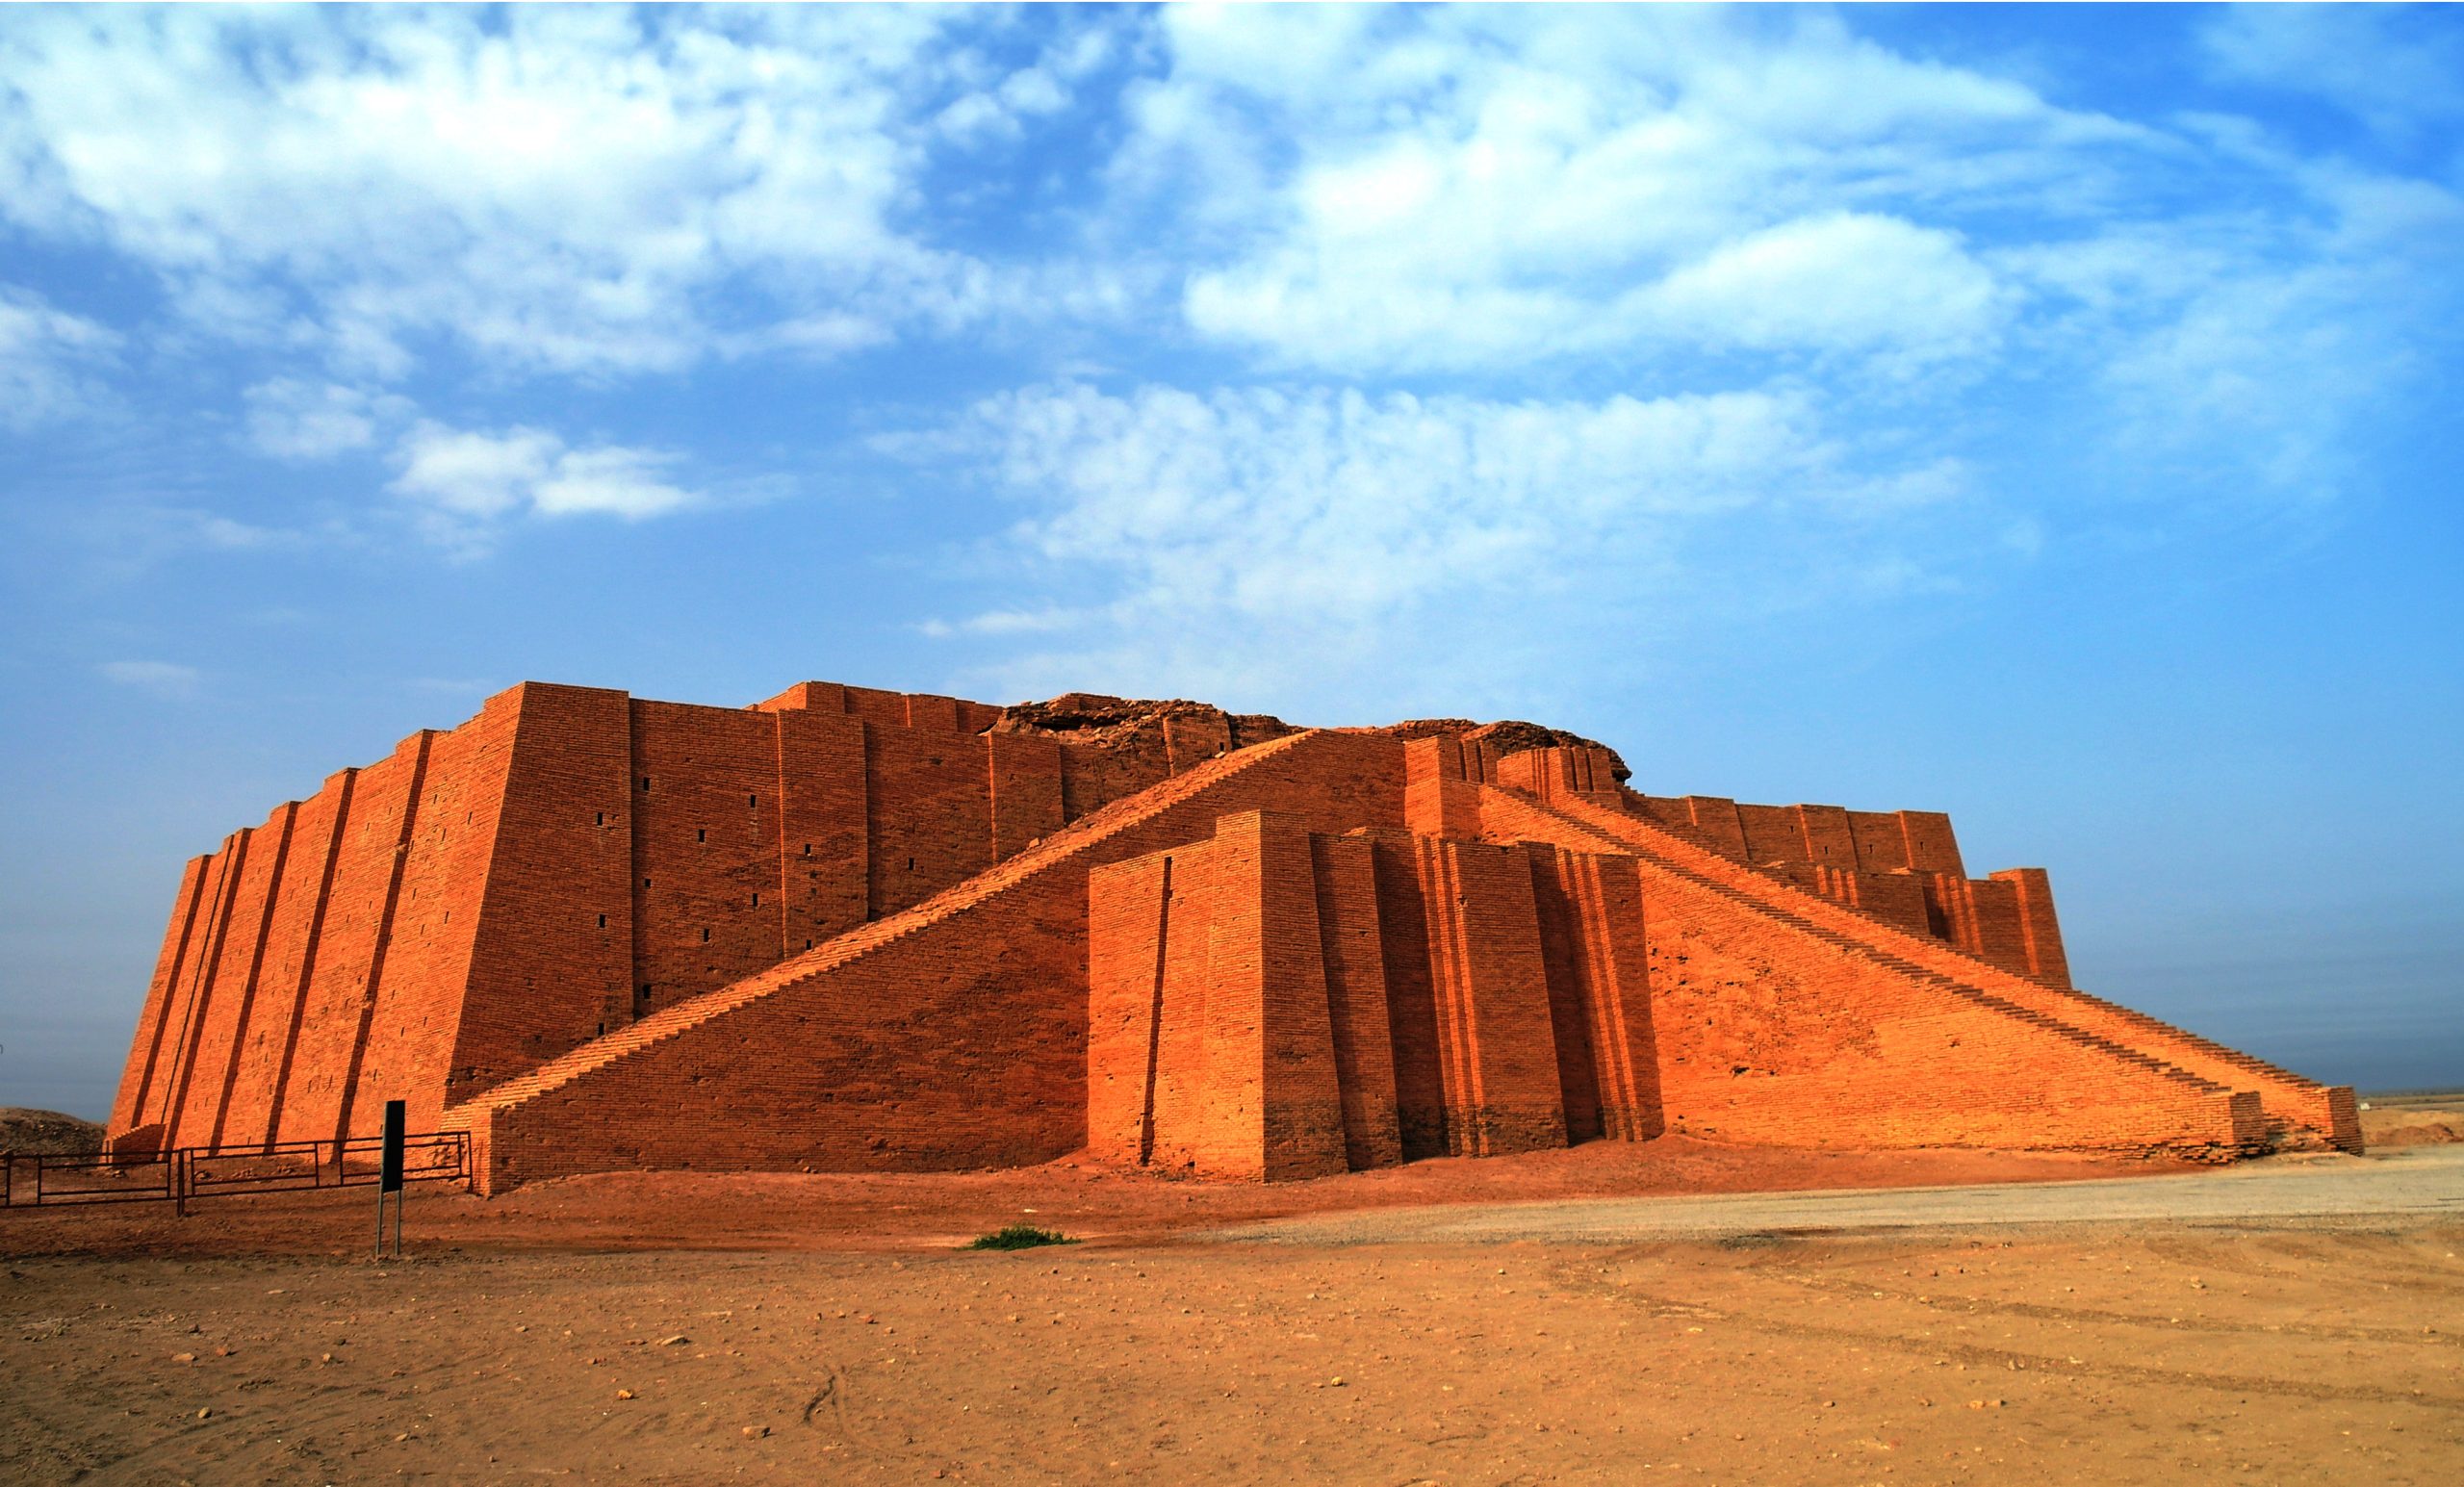 Restored ziggurat in ancient Ur, sumerian temple, Iraq. YAYIMAGES.